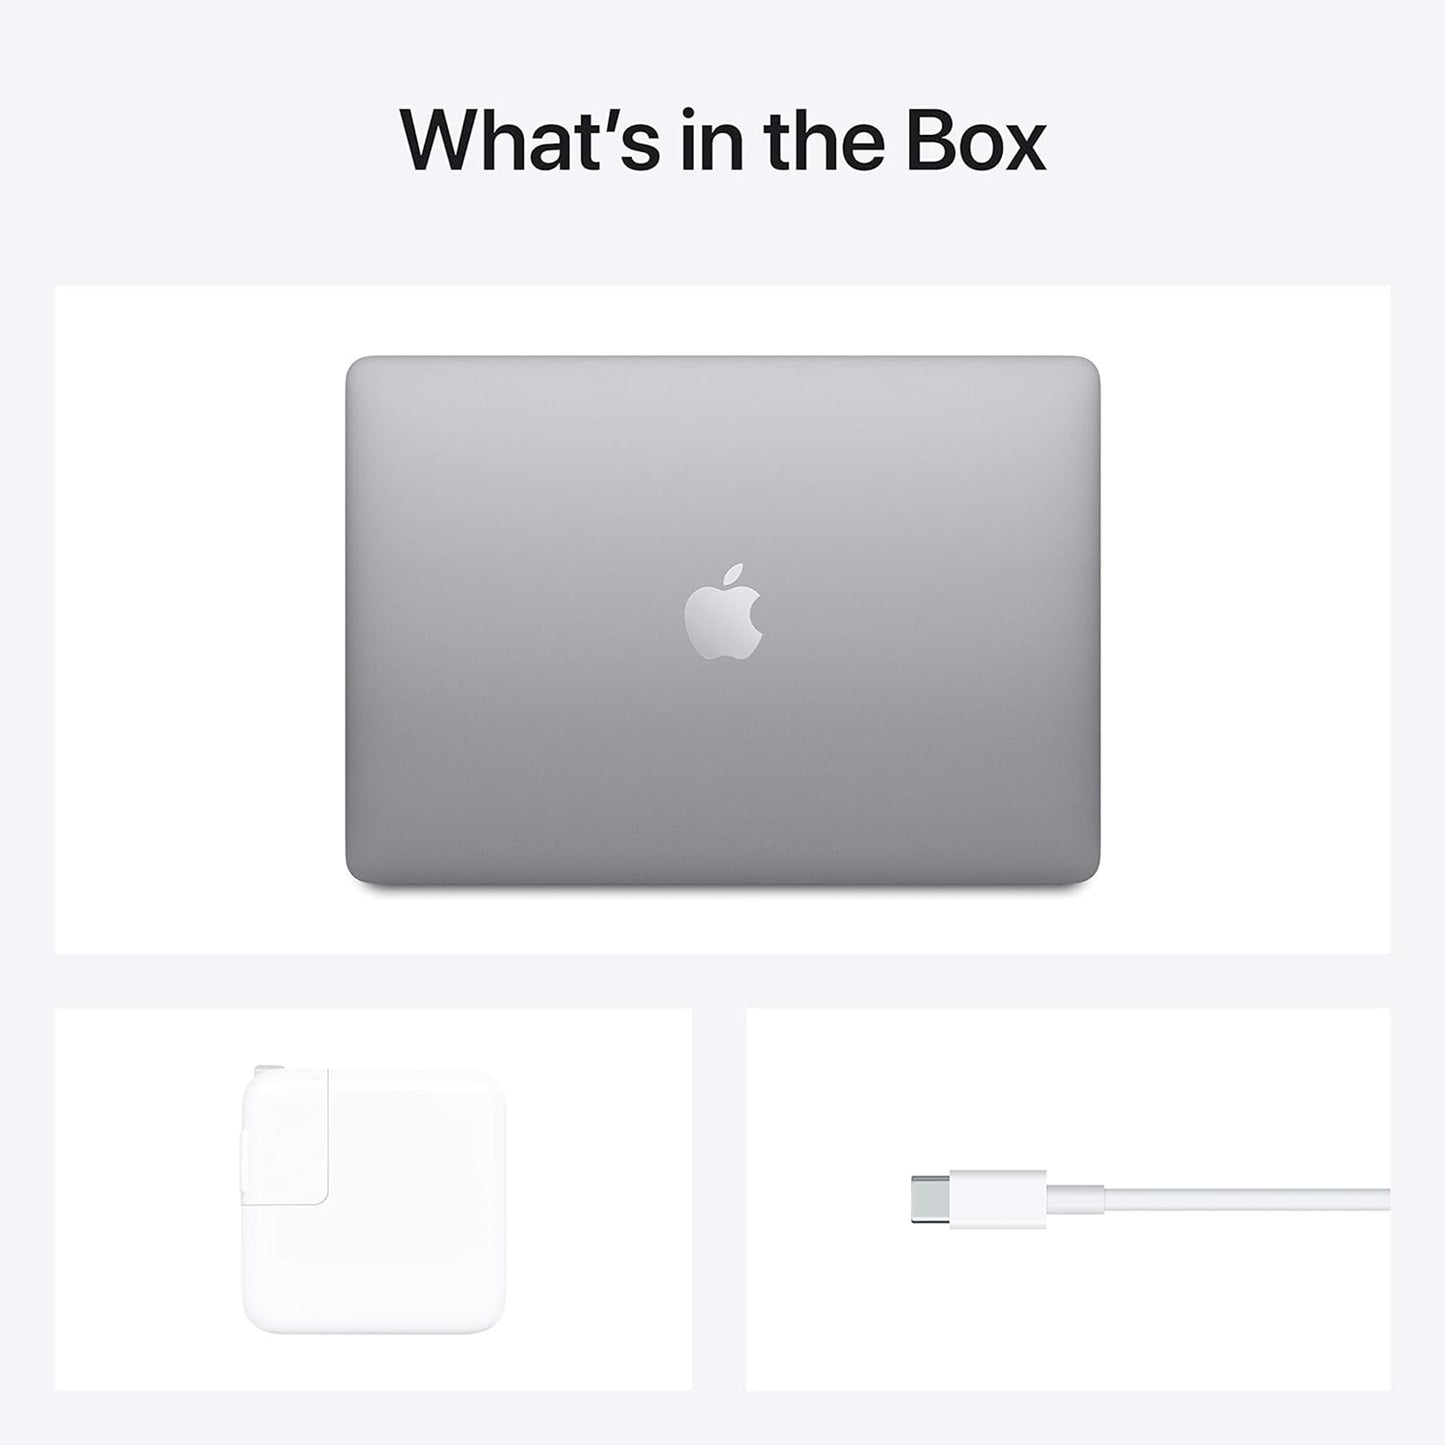 Apple 2020 MacBook Air Laptop M1 Chip، شاشة Retina مقاس 13 بوصة، ذاكرة الوصول العشوائي 8 جيجابايت، تخزين SSD سعة 256 جيجابايت، لوحة مفاتيح بإضاءة خلفية، كاميرا FaceTime HD، معرف اللمس. يعمل مع آيفون/آي باد؛ فضاء رمادي